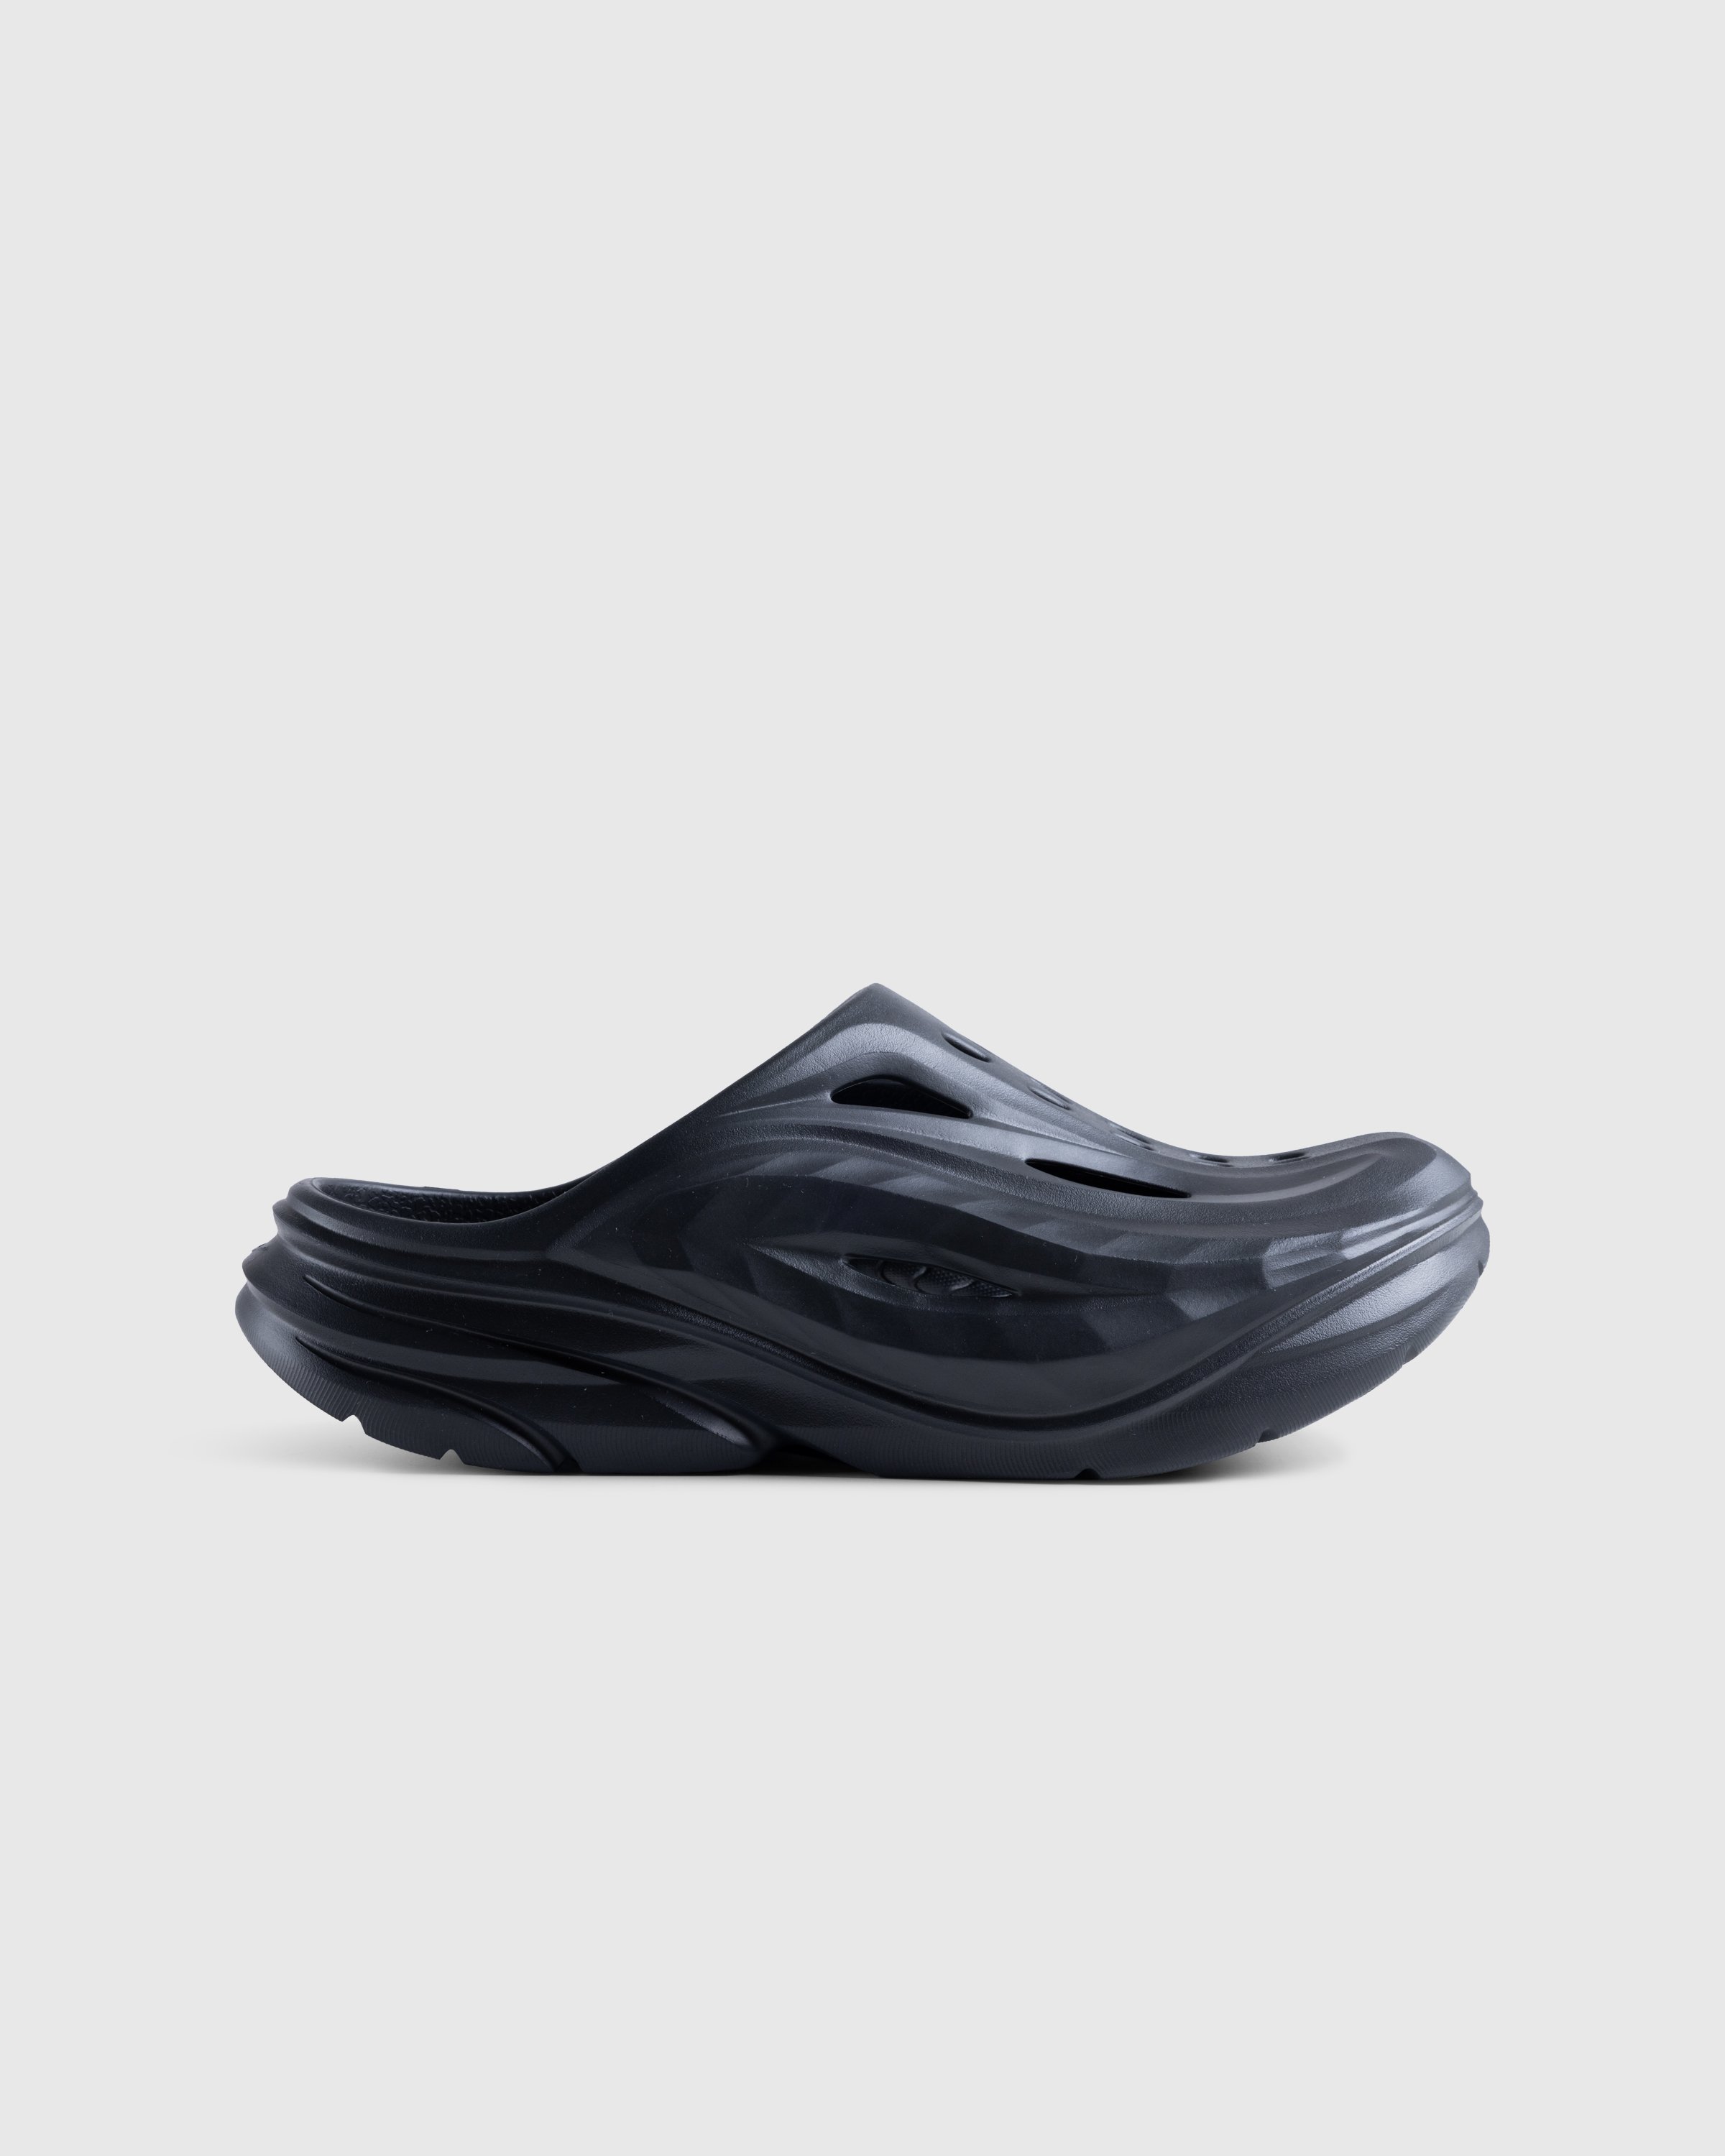 HOKA - W ORA RECOVERY MULE - Footwear - Black - Image 1